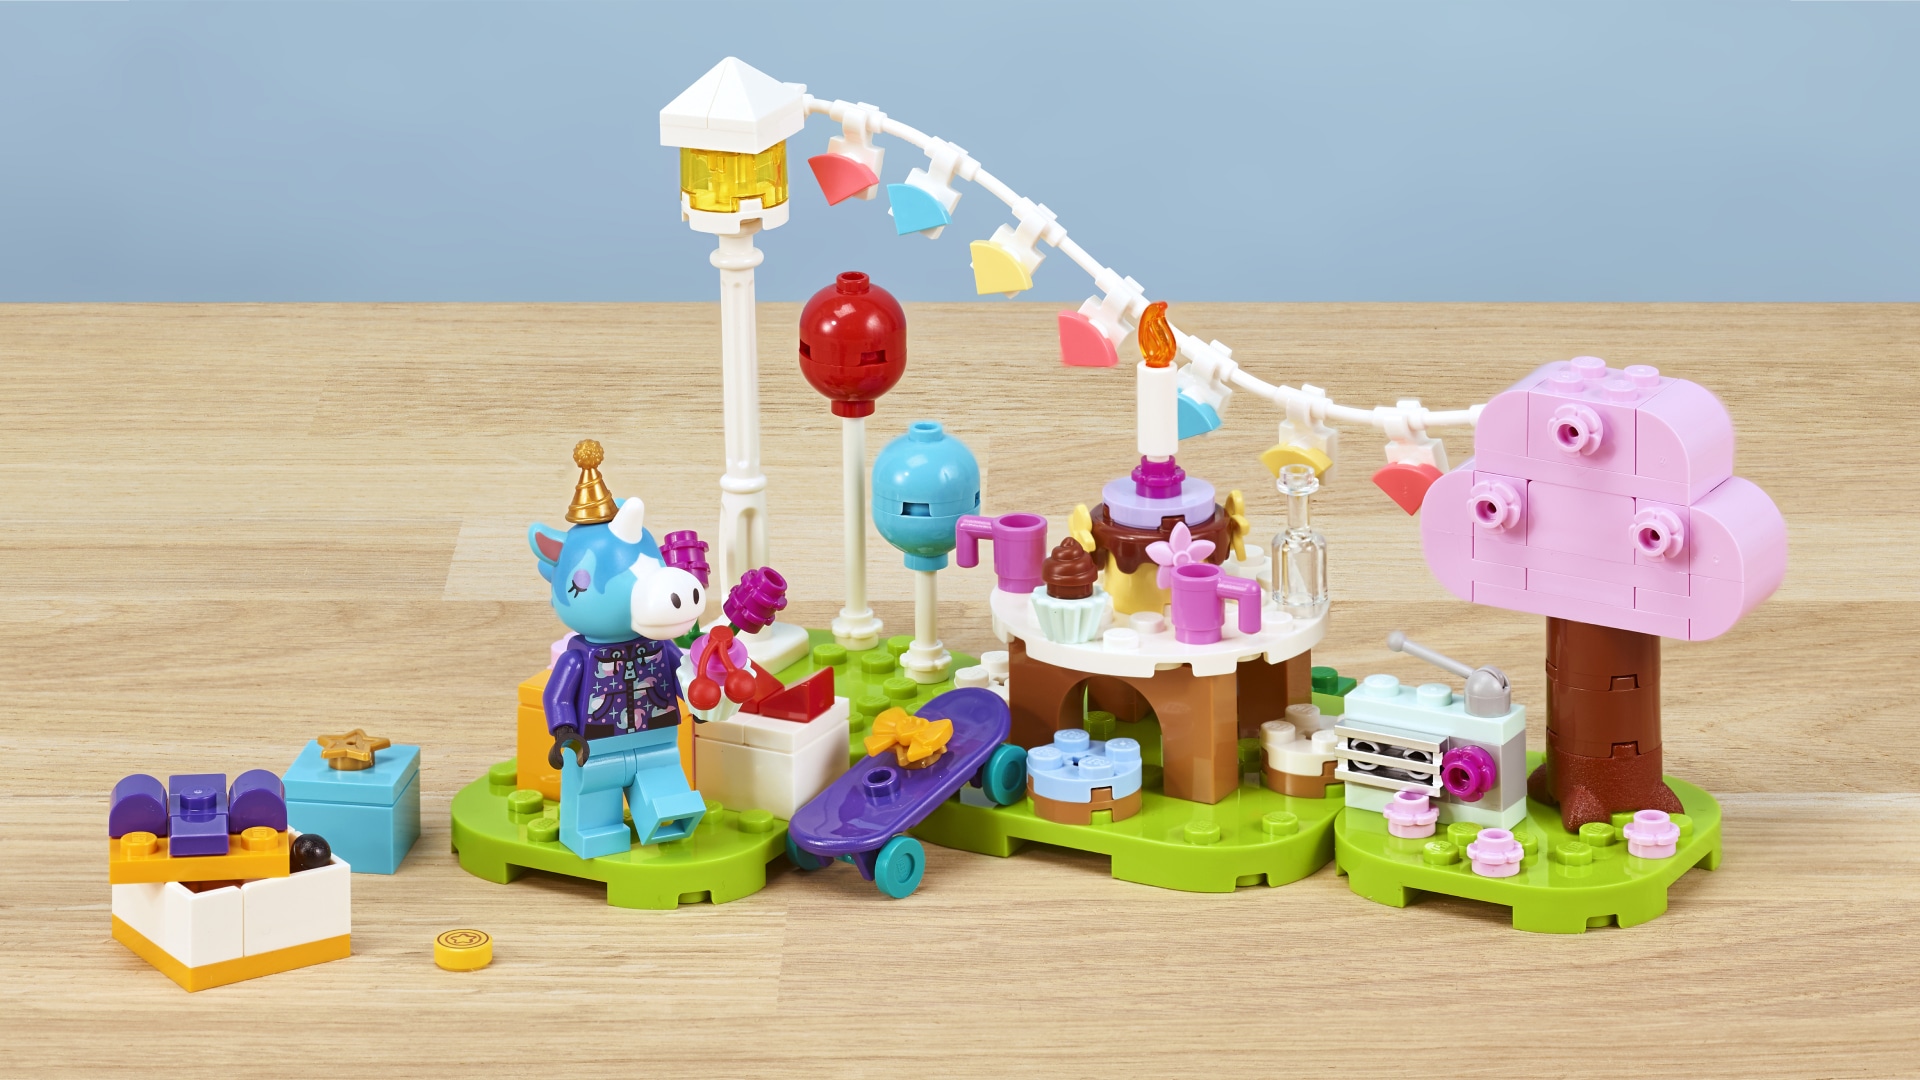 Julian’s Birthday Party (77046) - Animal Crossing Set